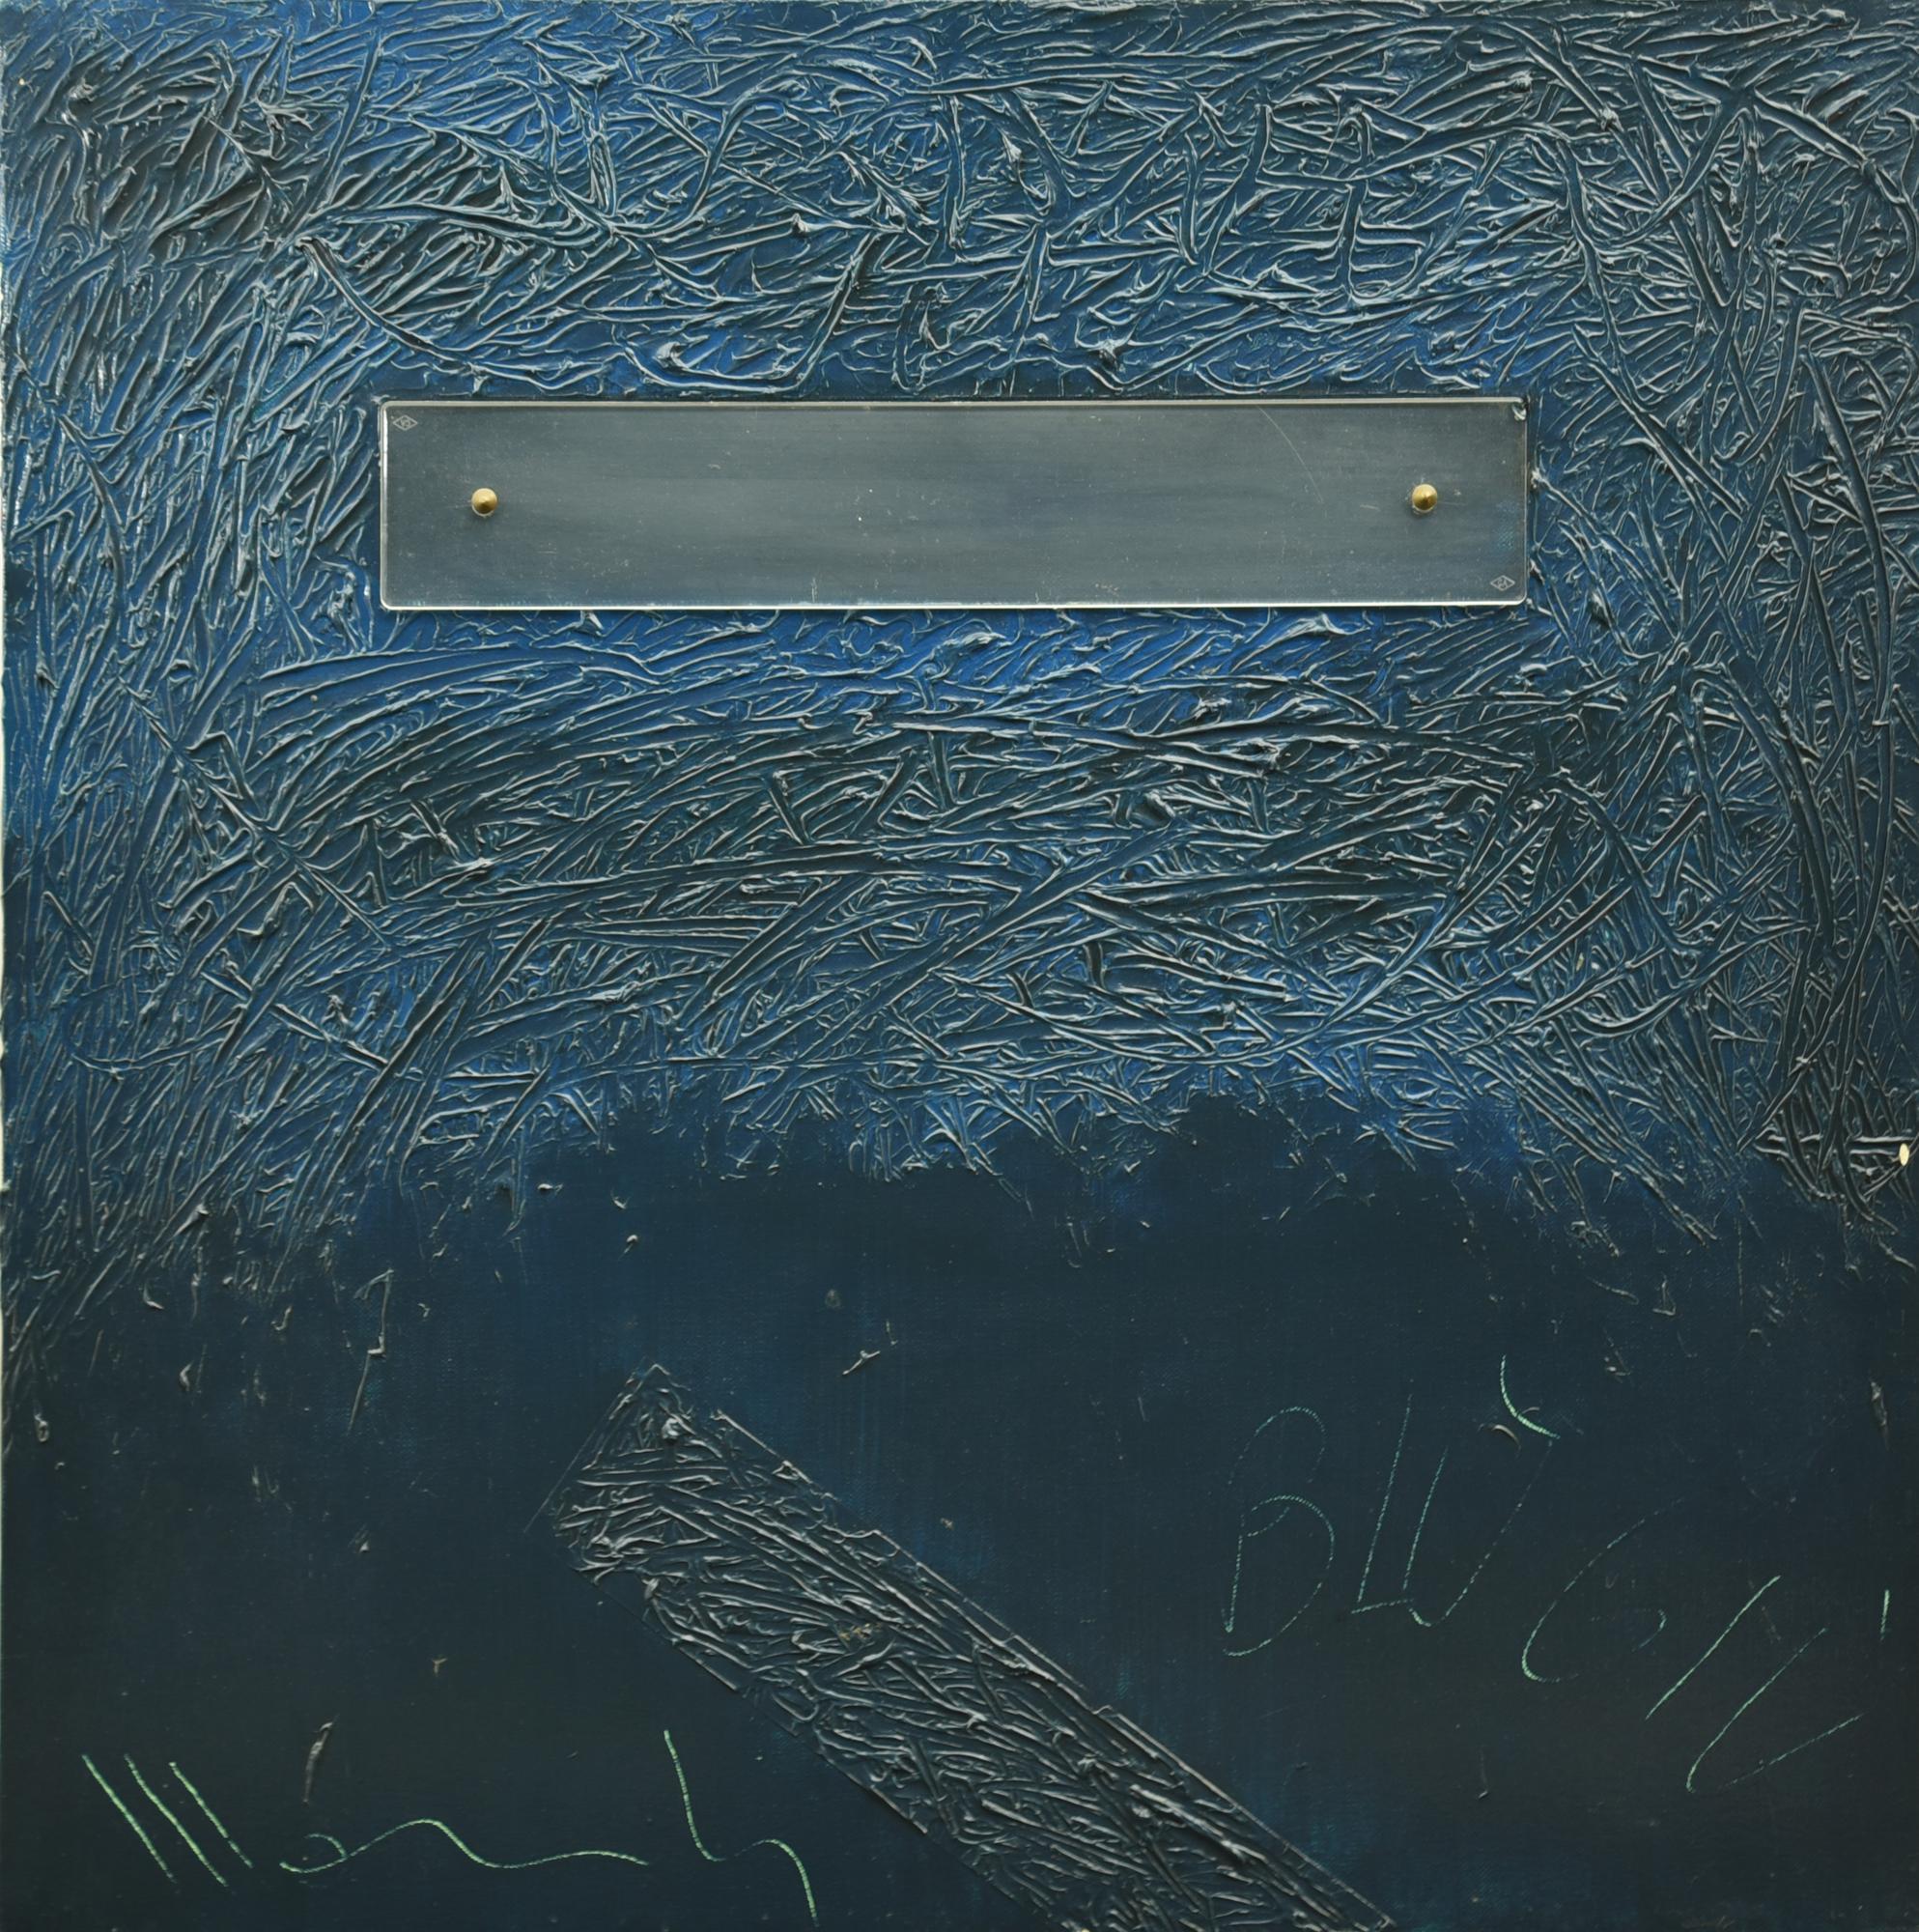 Aldo Mondino (1938 - 2005) BLU GIU' olio e plexiglass su tela, cm 70x70 firma...